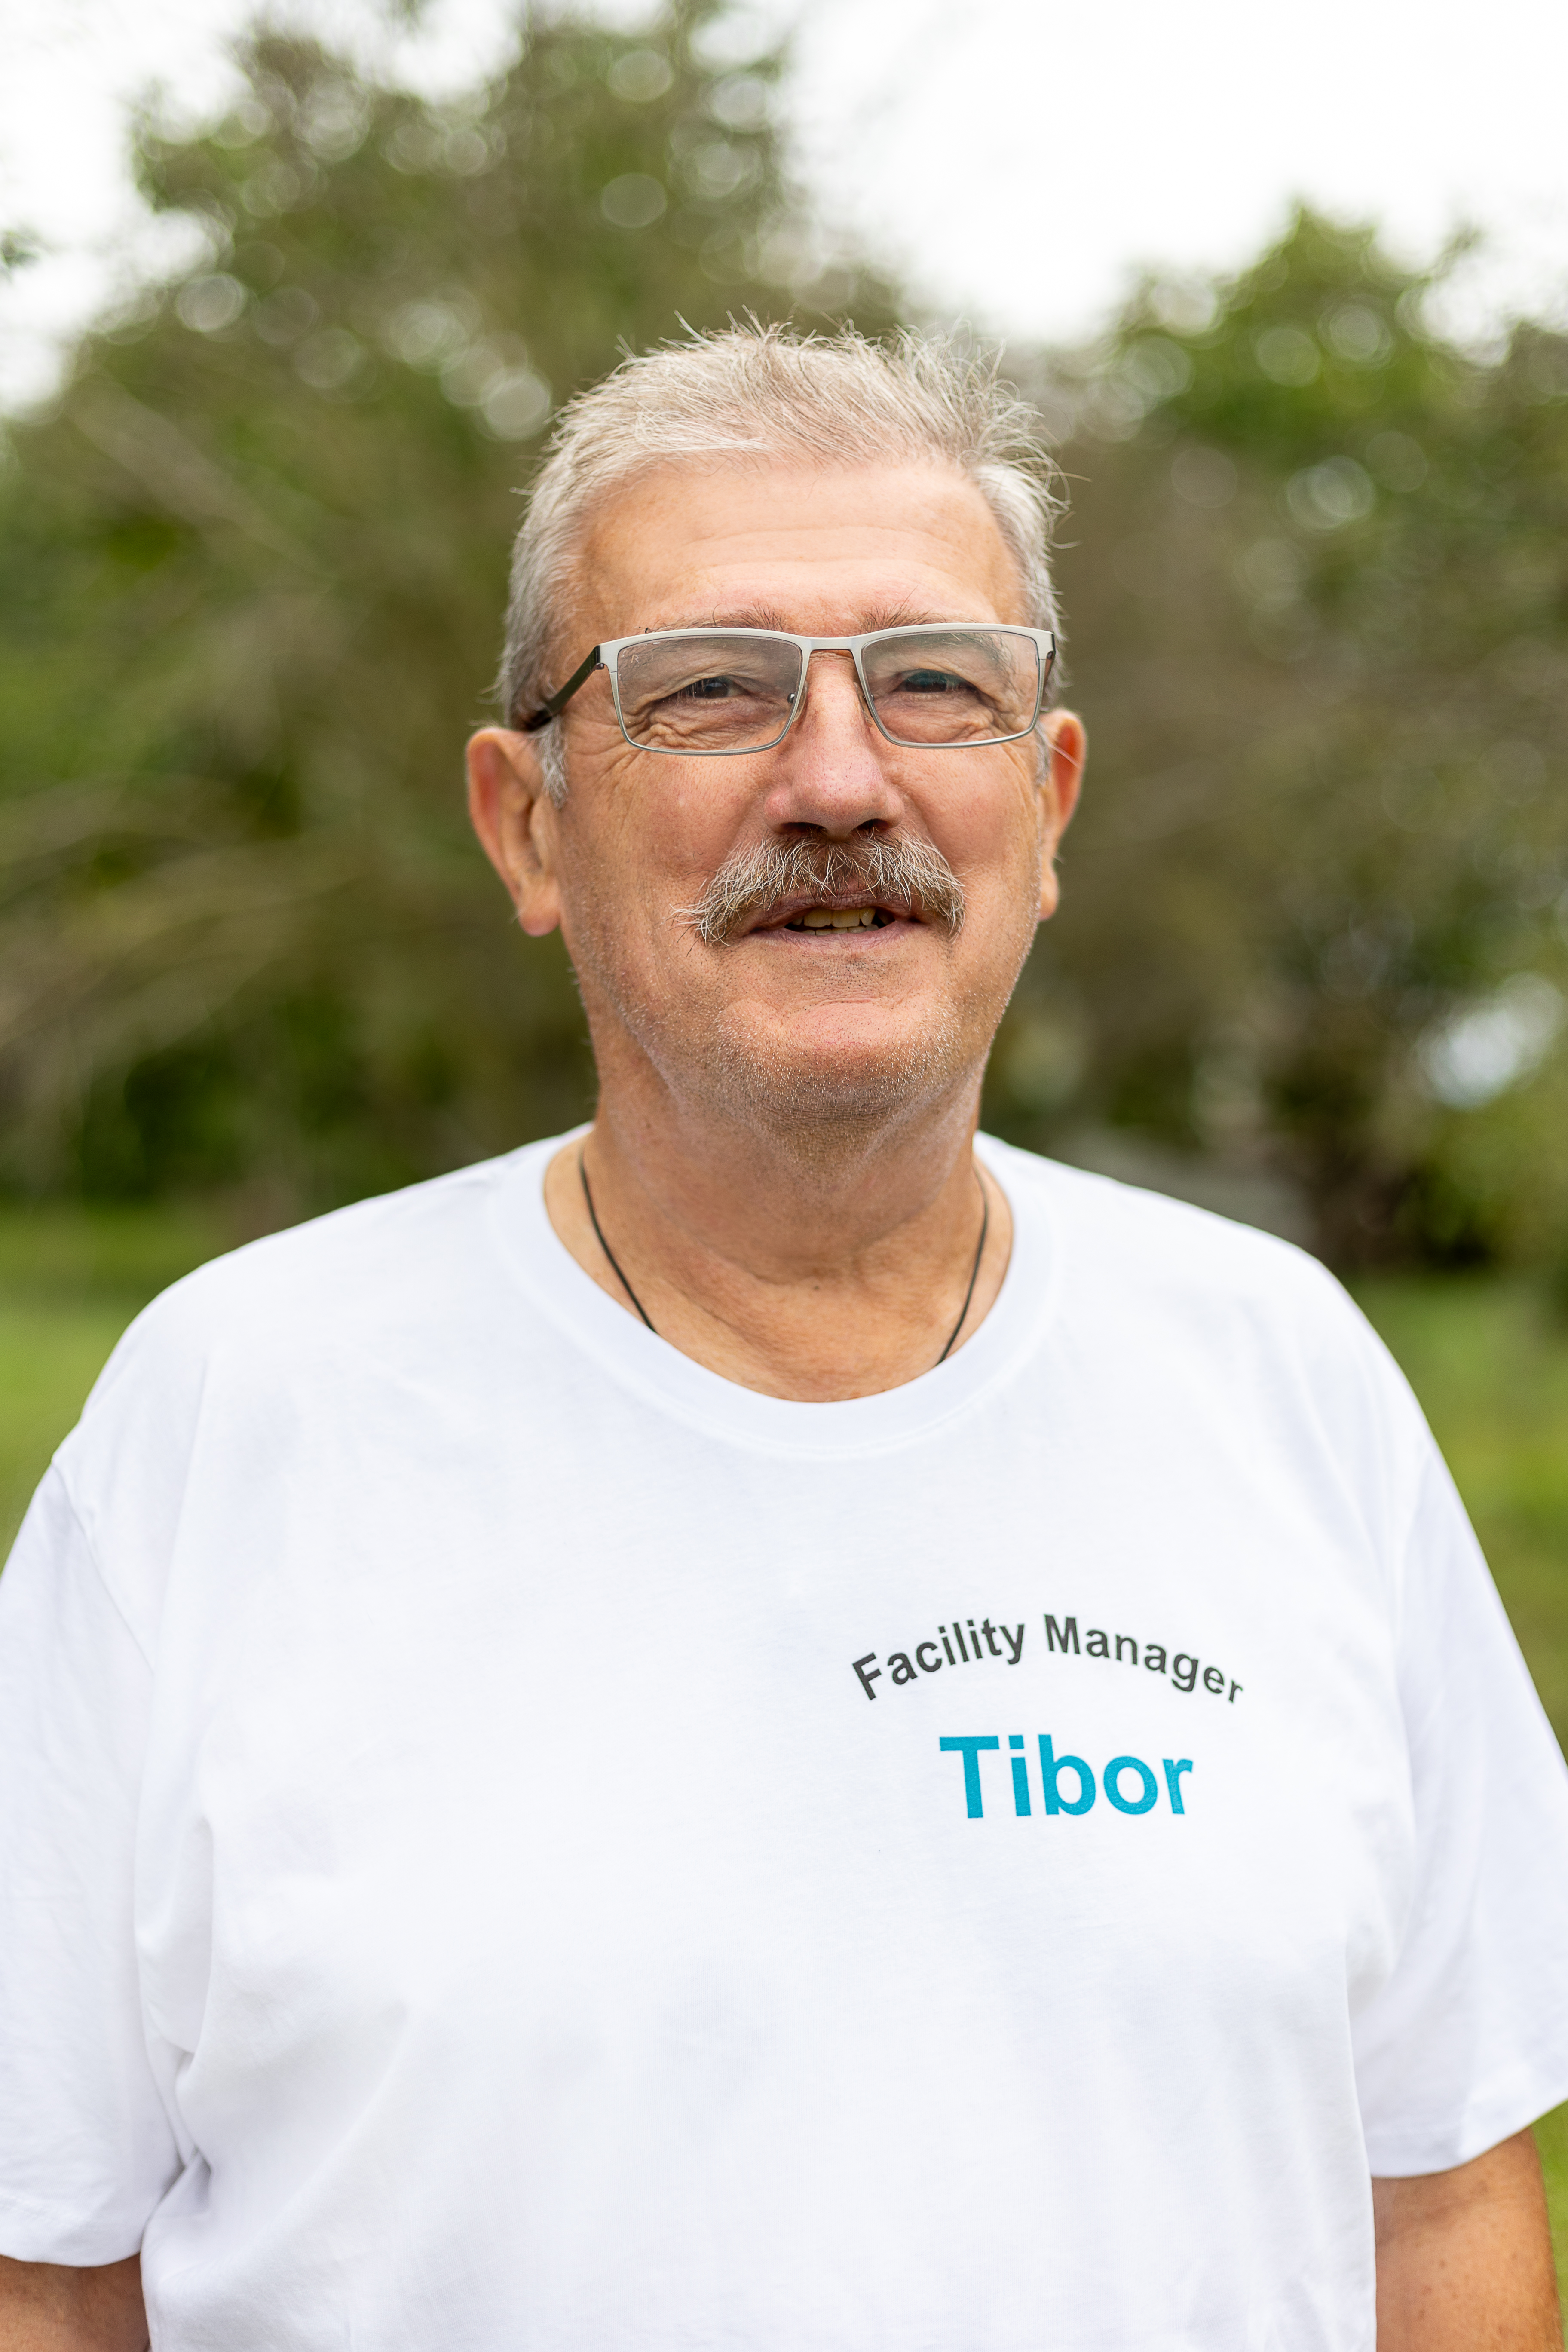 Tibor: Facilitymanager